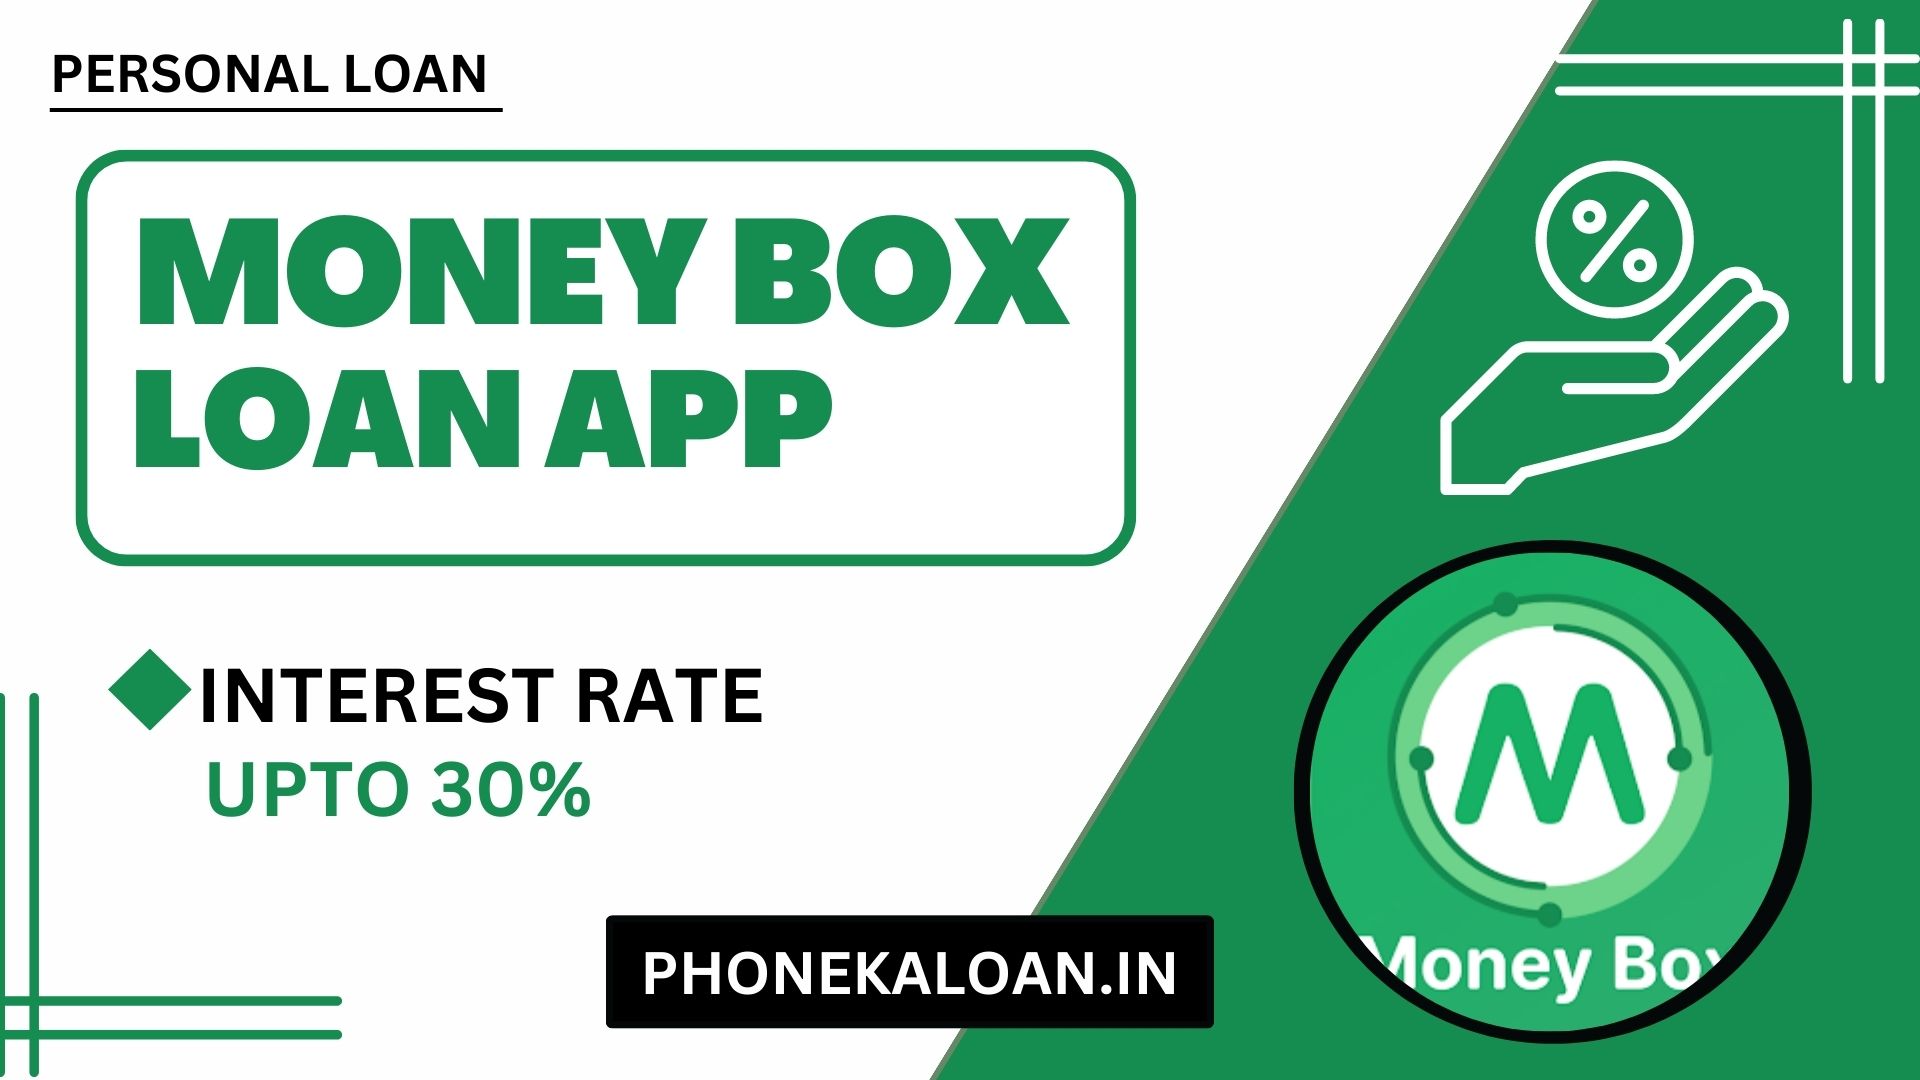 Money Box Loan App Interest Rate